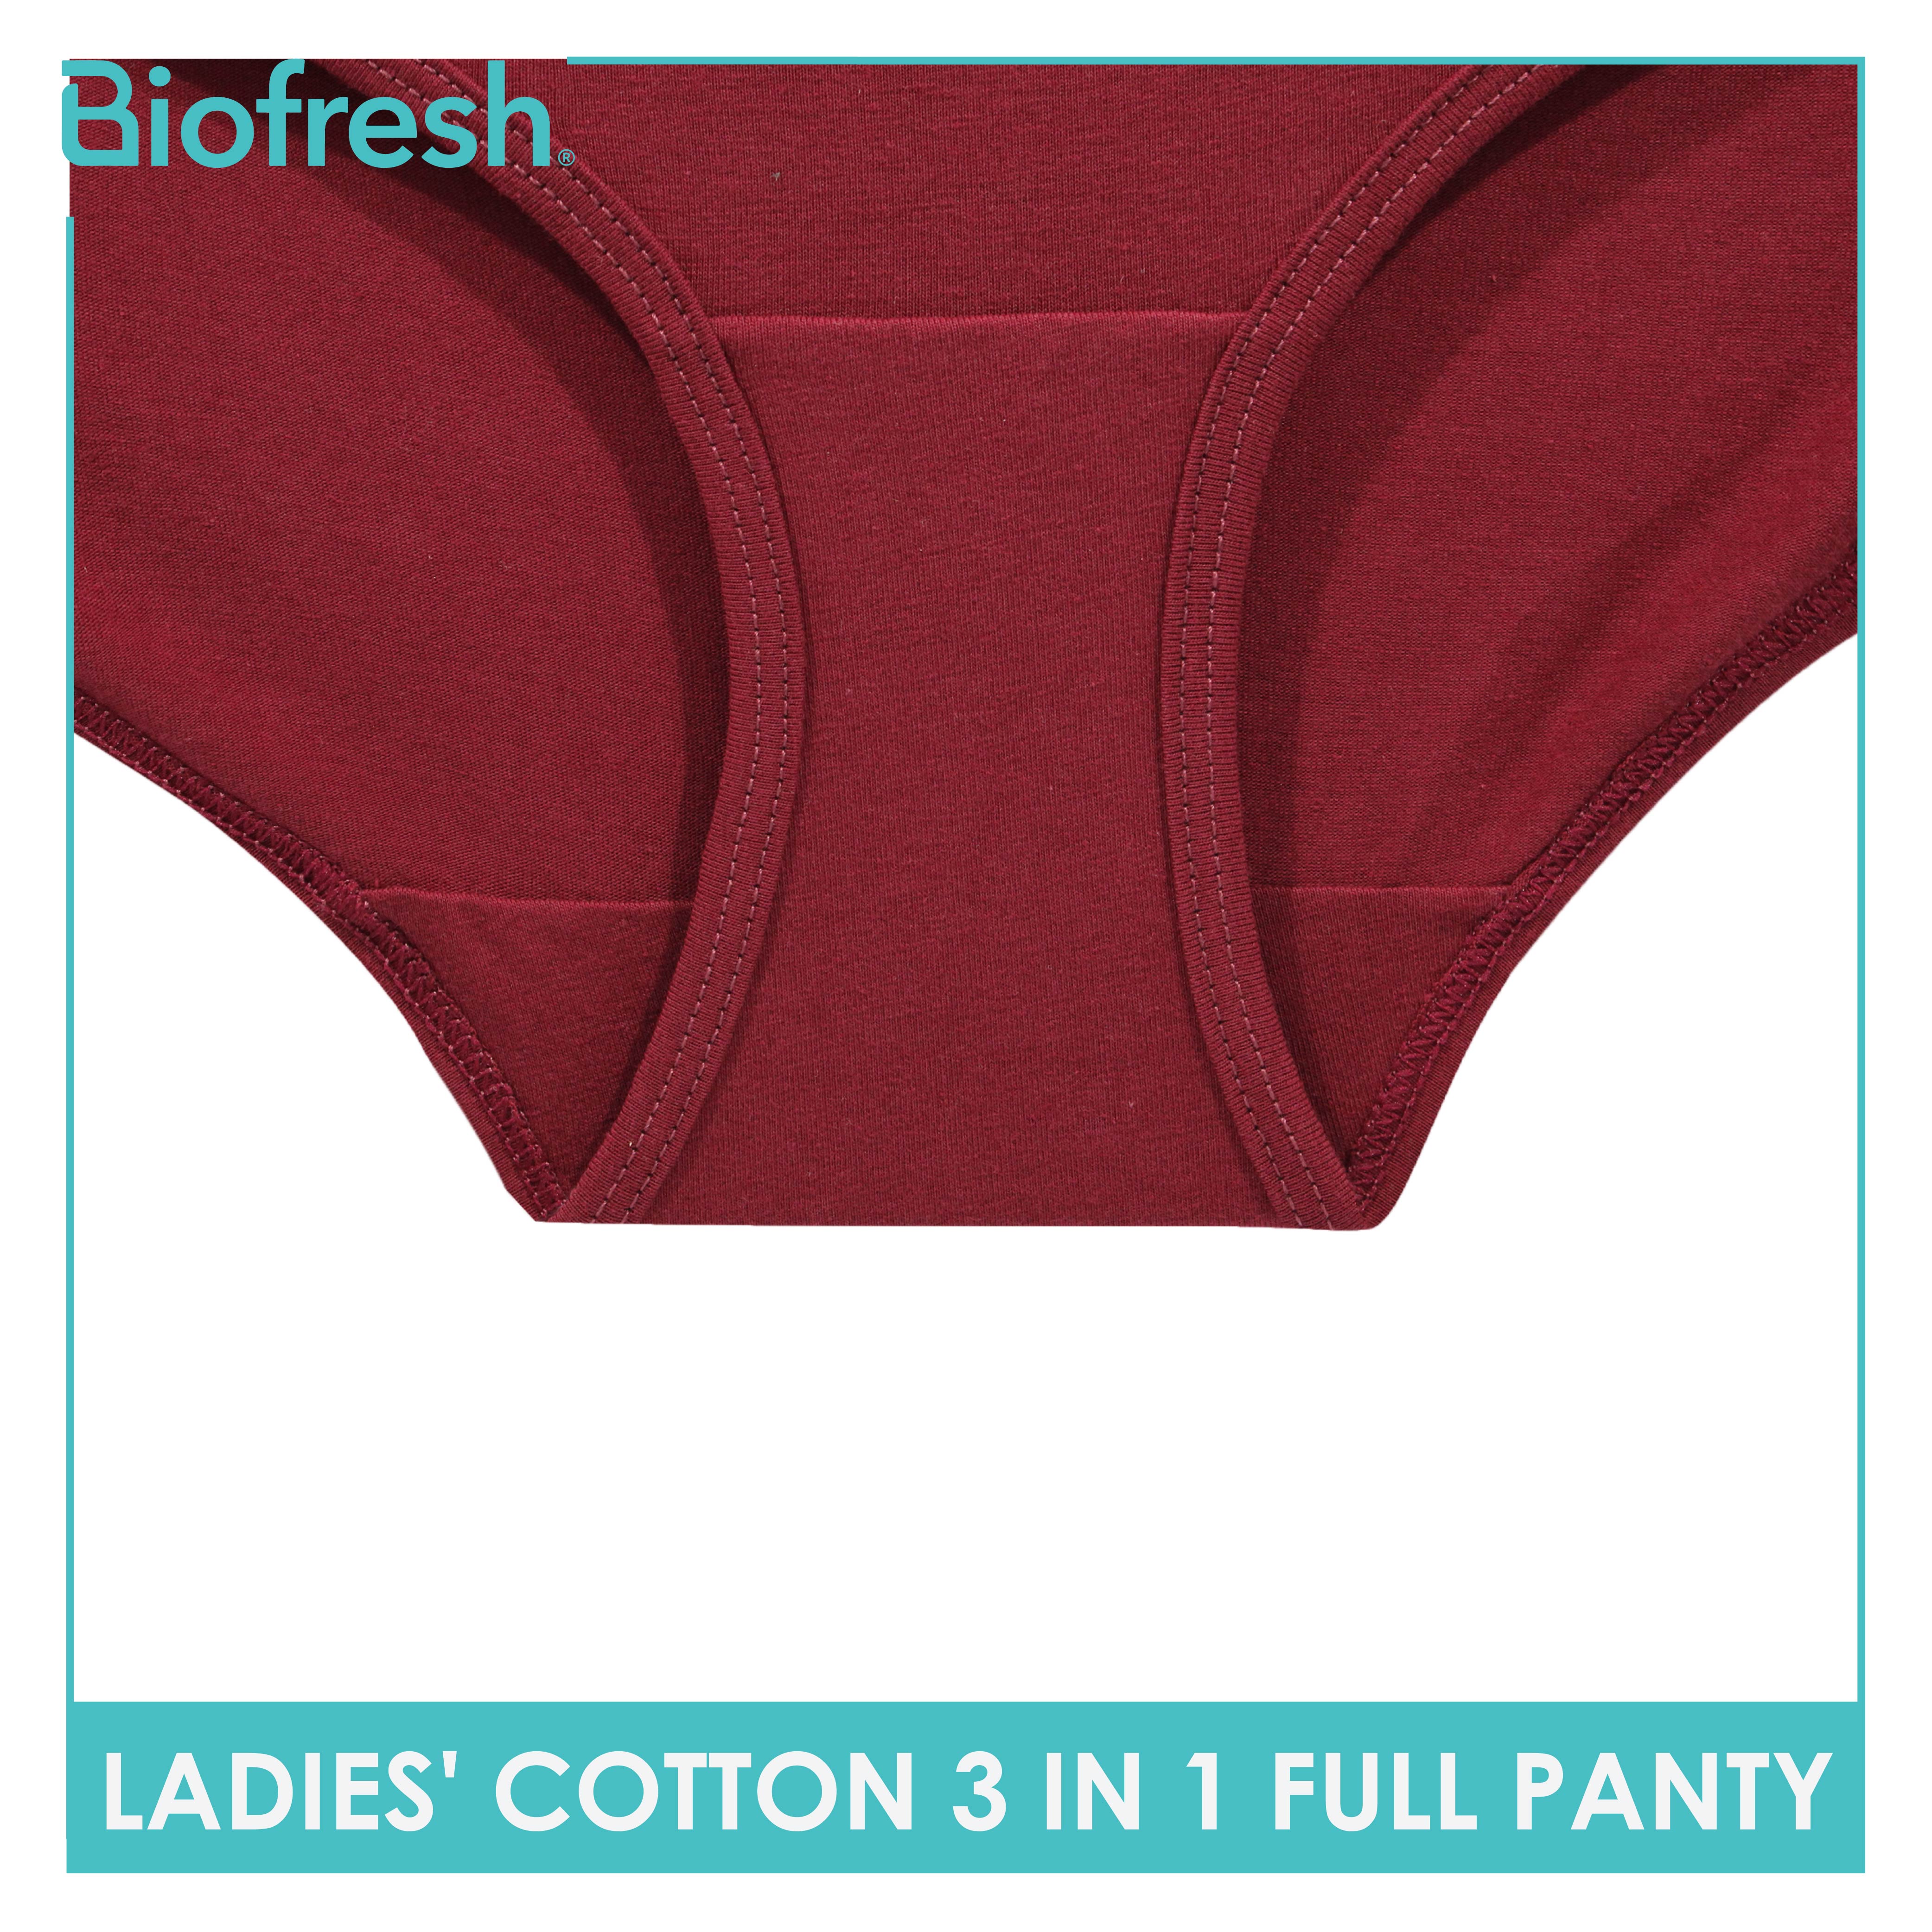 Biofresh Ladies' Antimicrobial Cotton Boyleg Panty 3 pieces in a pack  ULPBG13